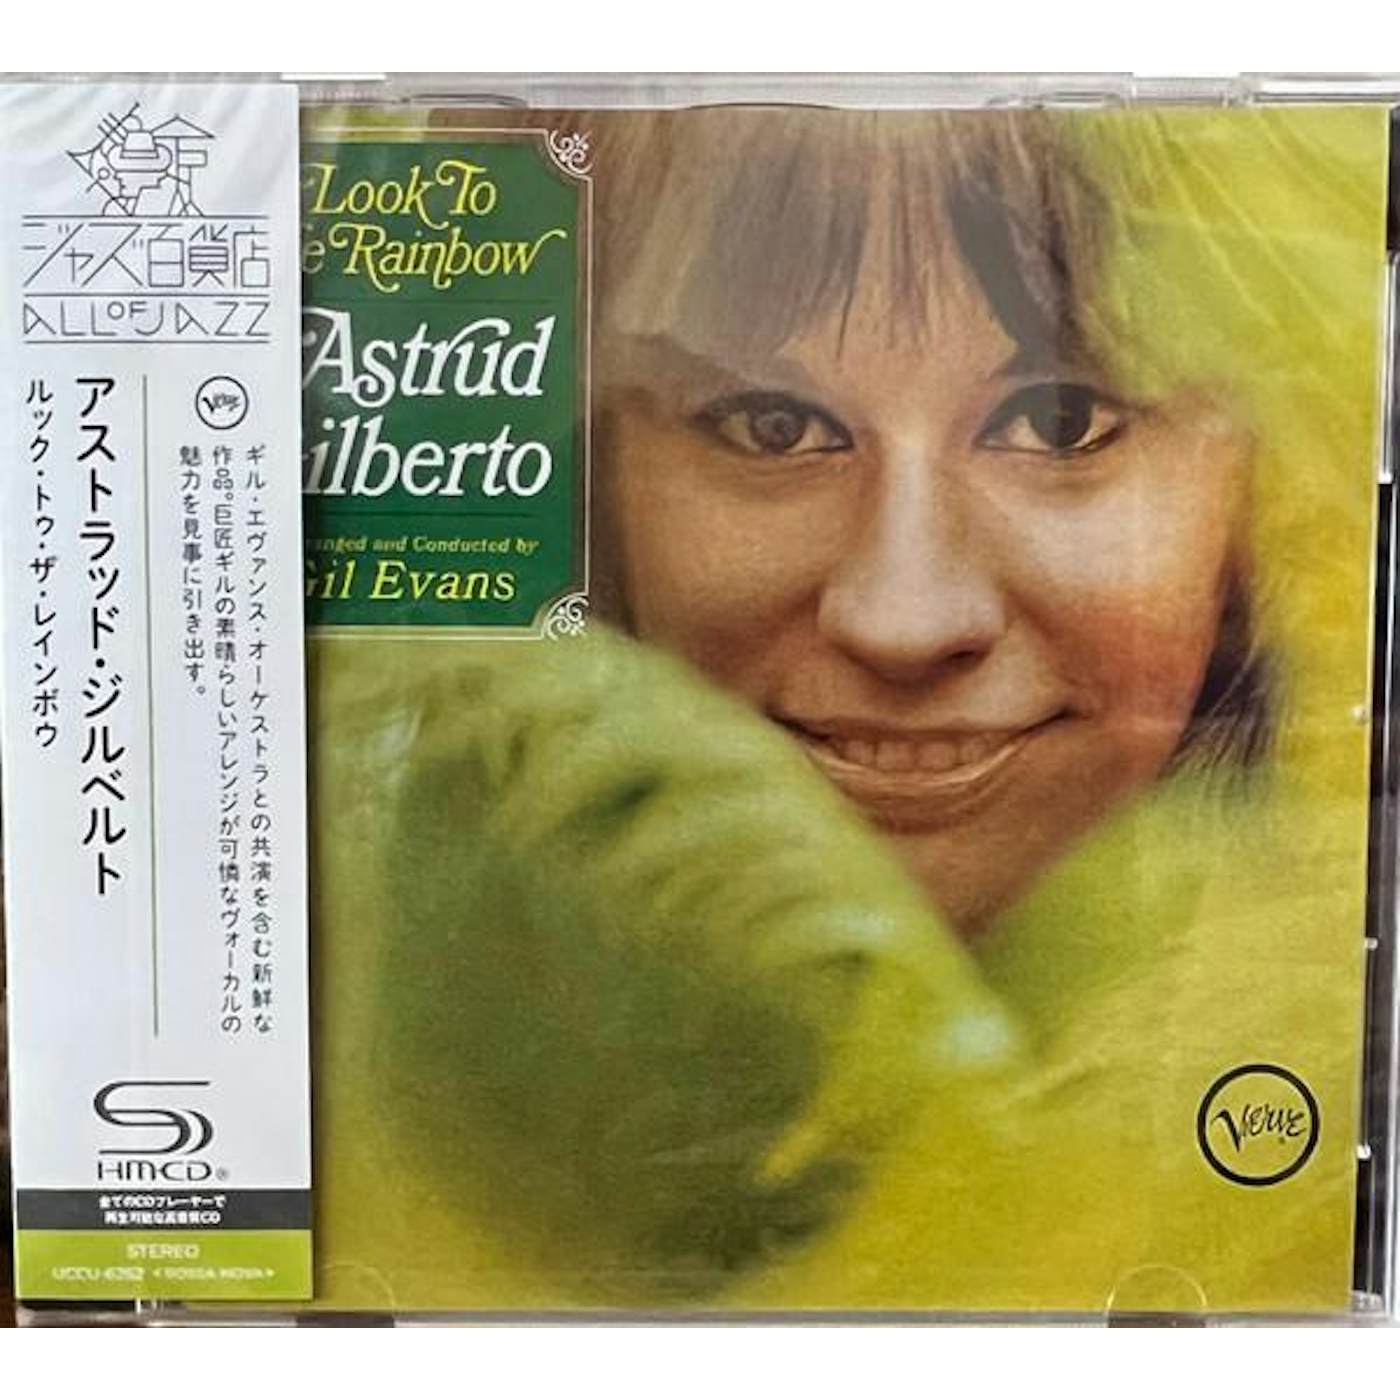 Astrud Gilberto LOOK TO THE RAINBOW CD